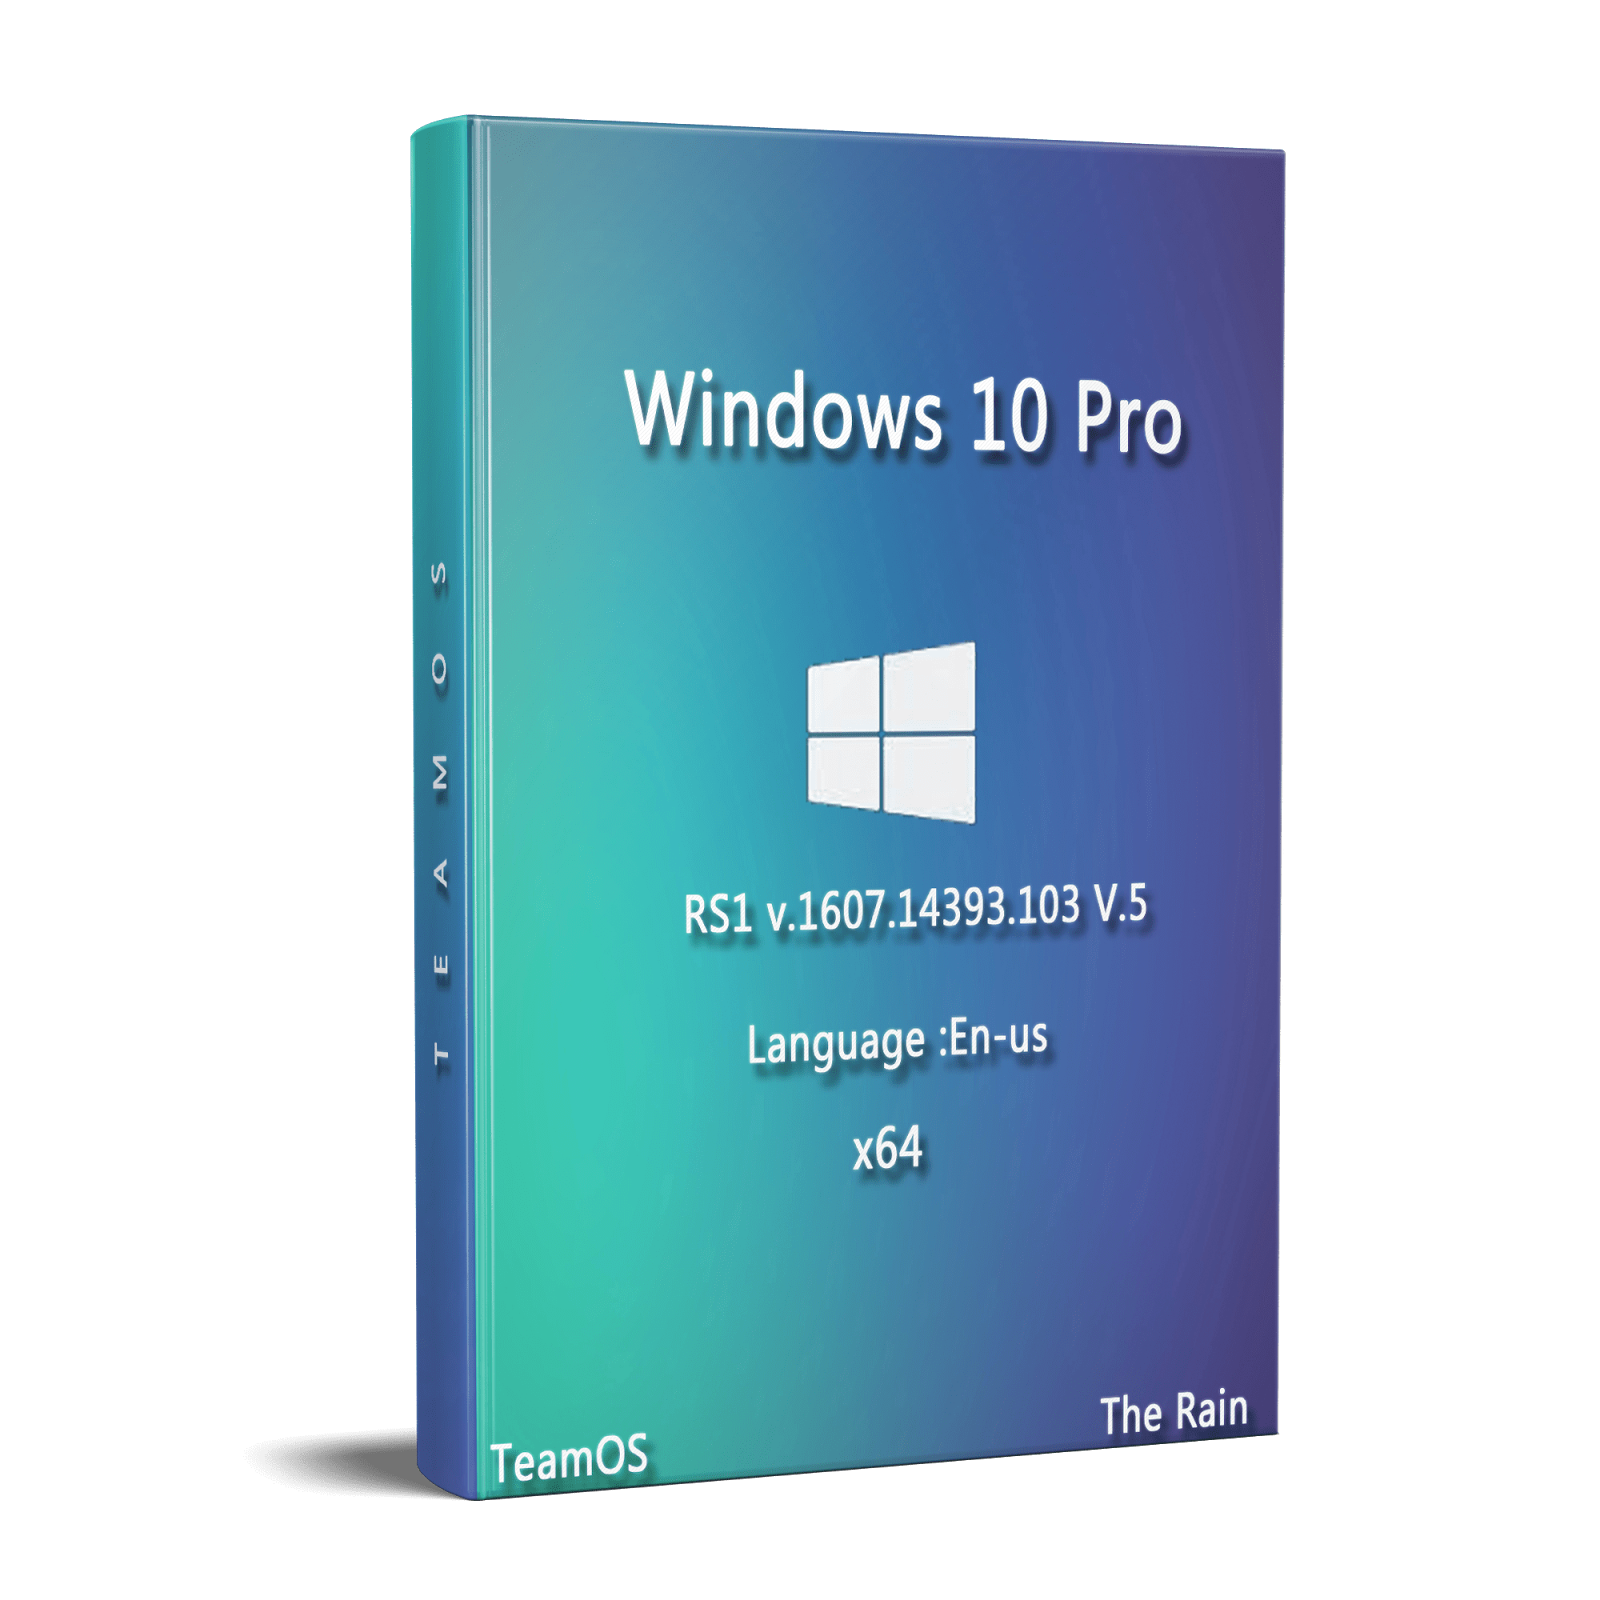 windows 10 pro update free download